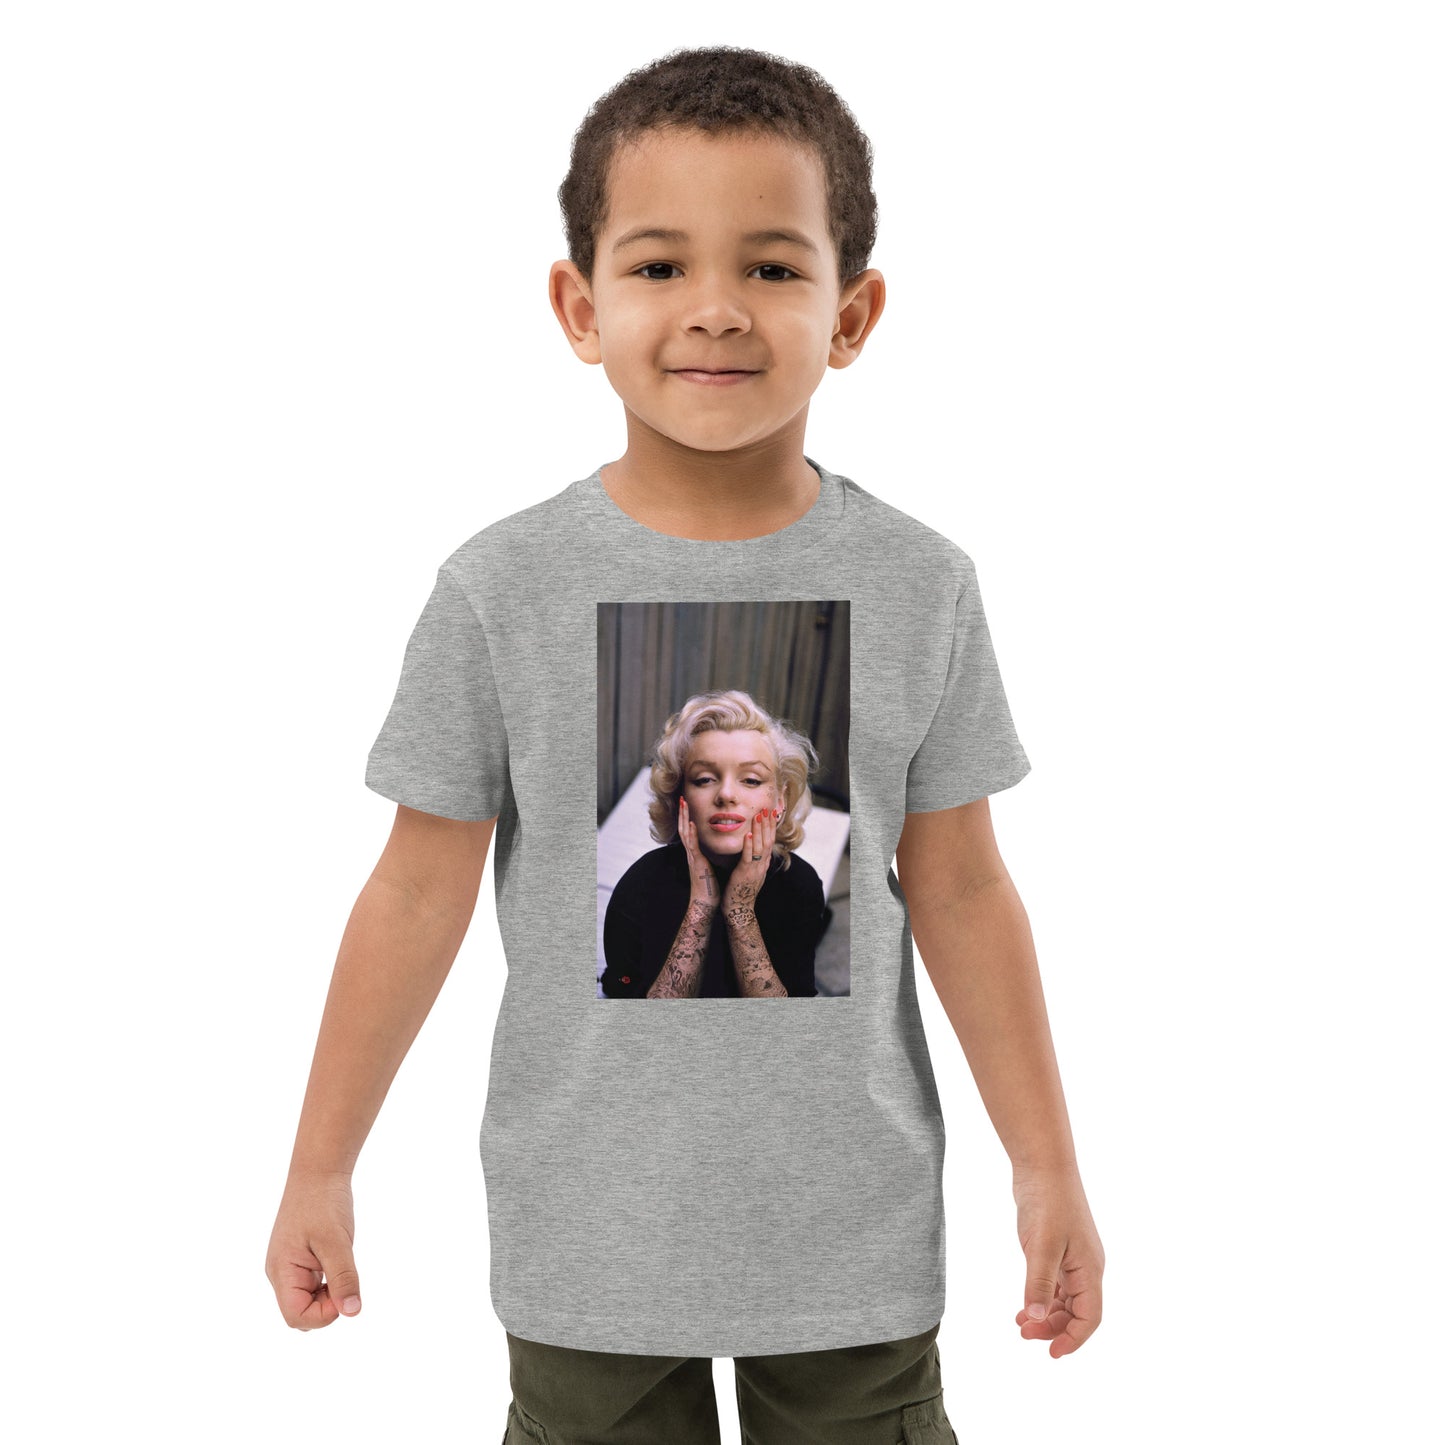 Marilyn Monroe Tattooed KiSS Organic cotton kids t-shirt - Inked sleeve art